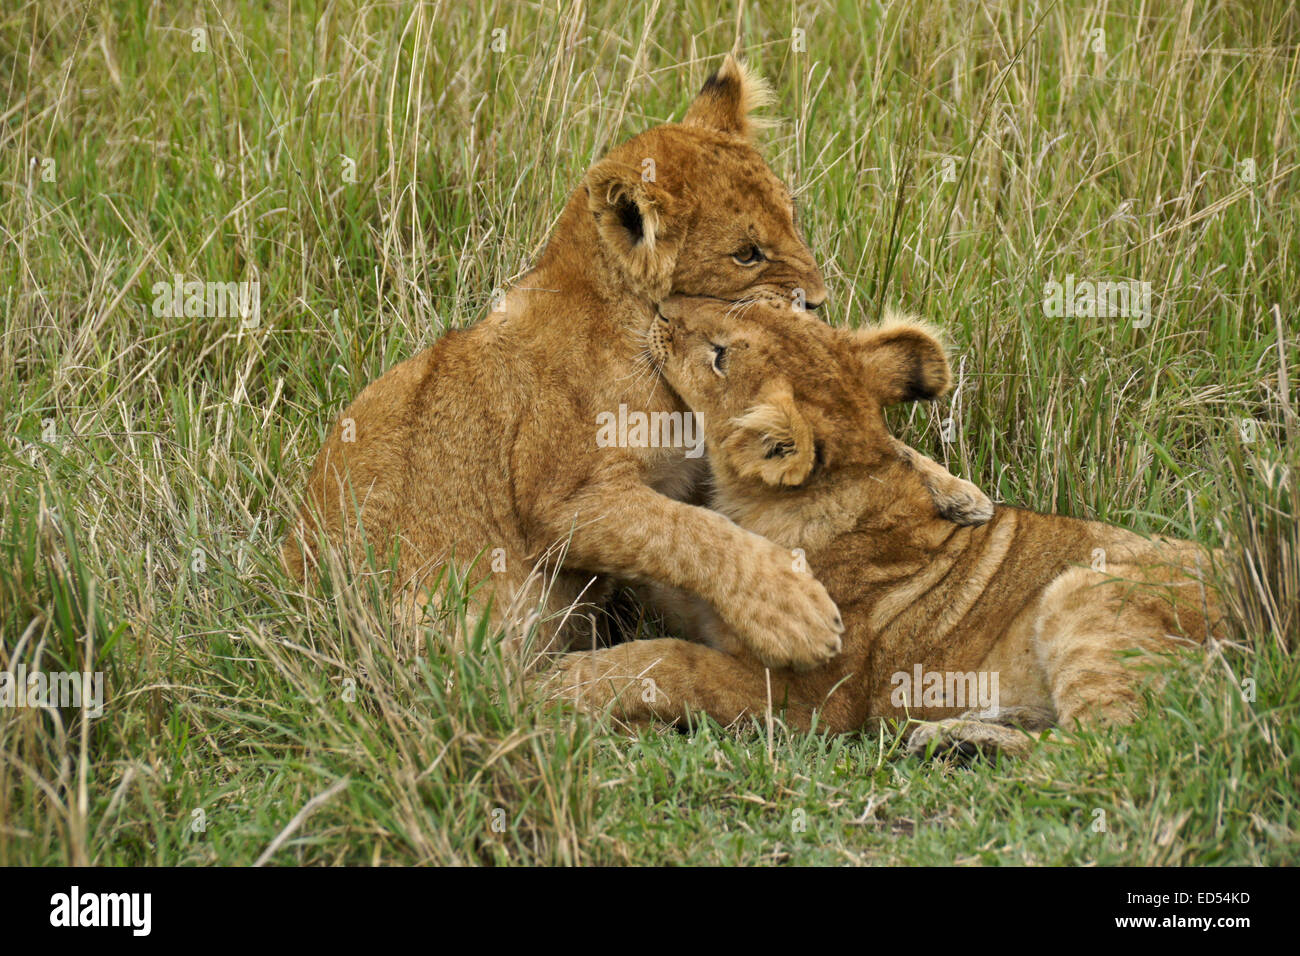 Lion cubs playing in grass, Masai Mara, Kenya Stock Photo